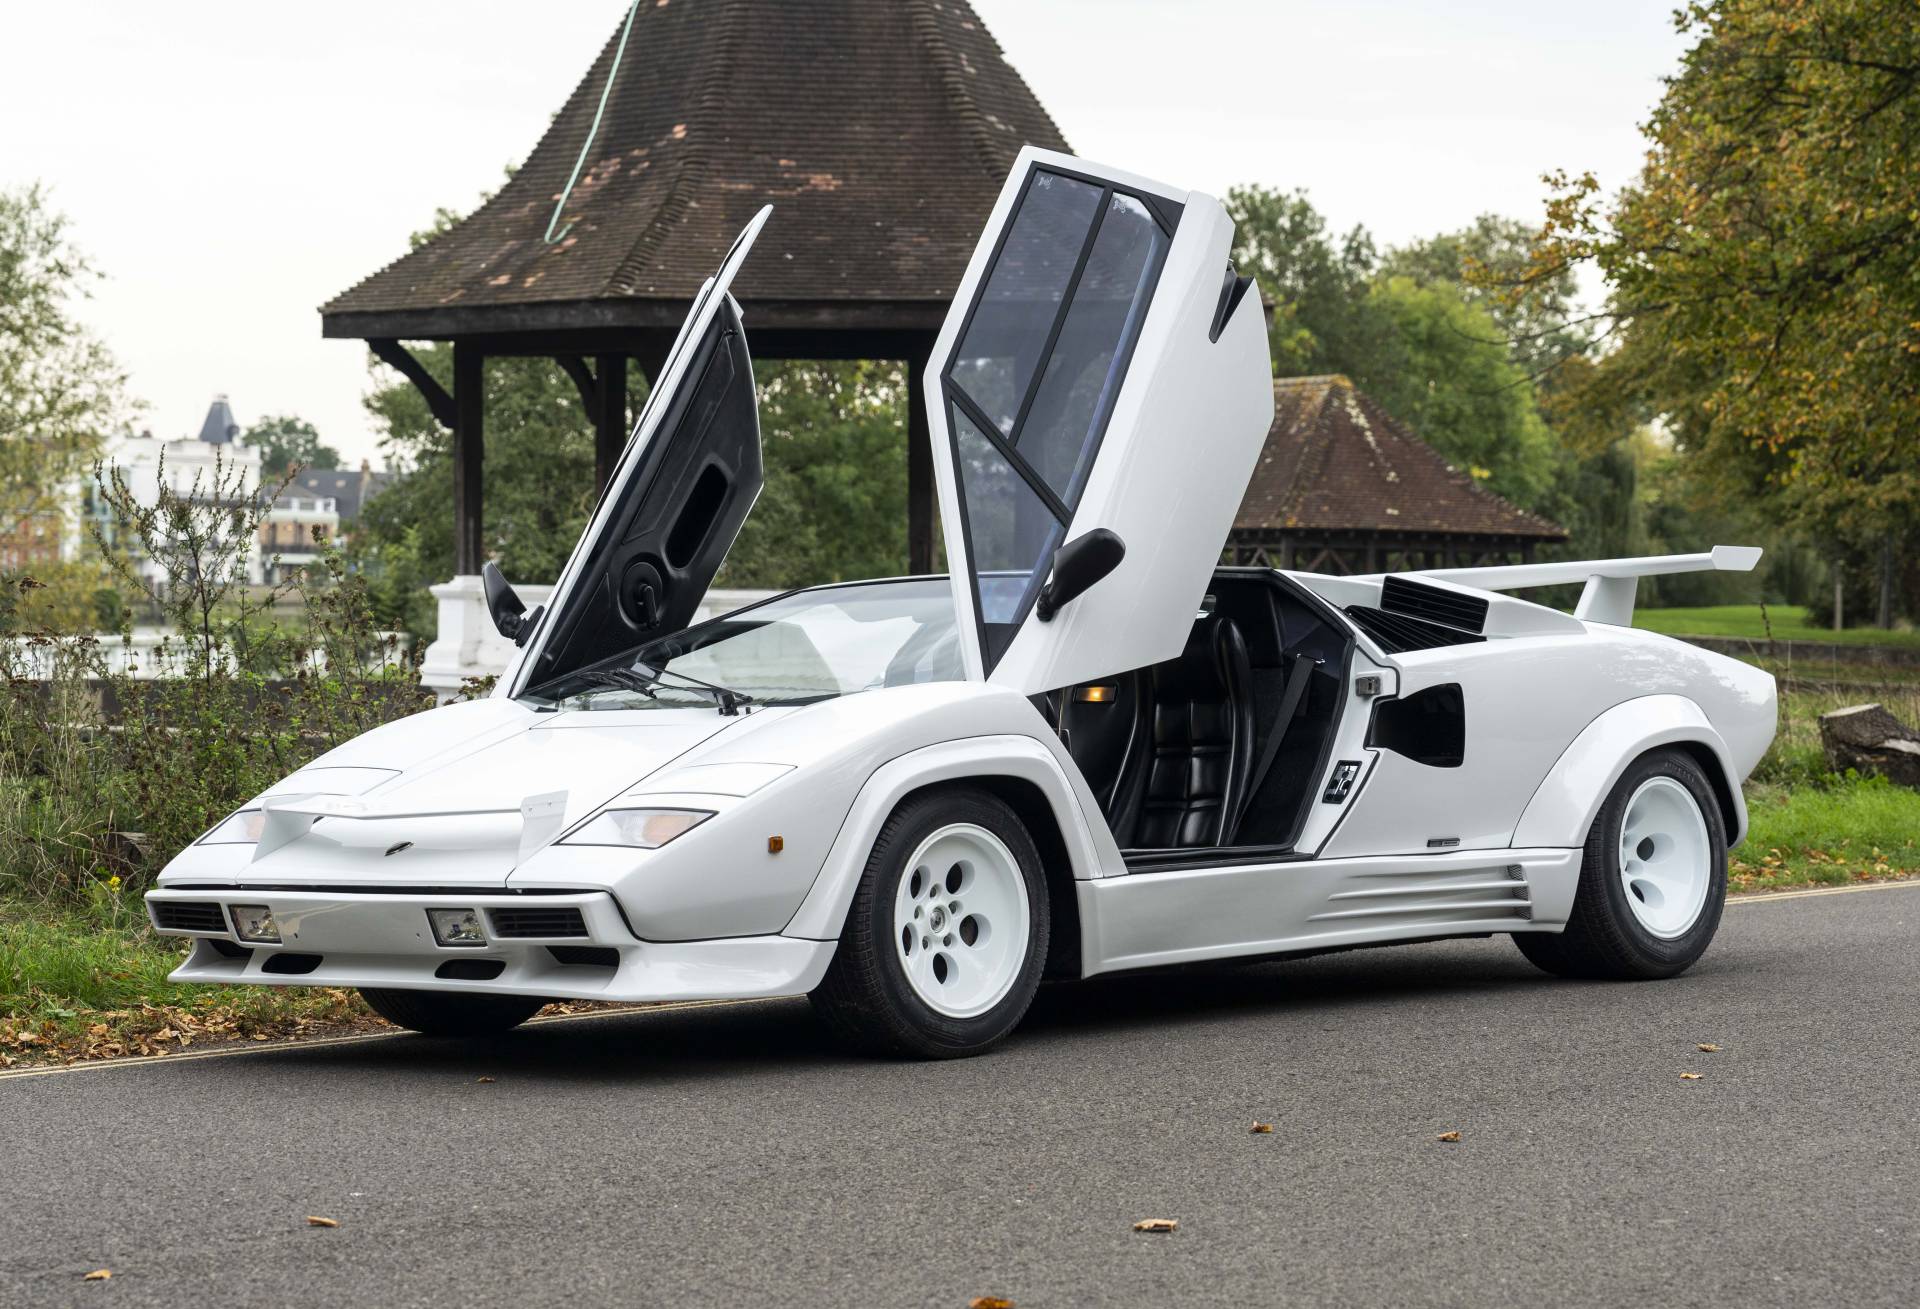 For Sale: Lamborghini Countach LP 5000 S QV (1988) offered for €585,483